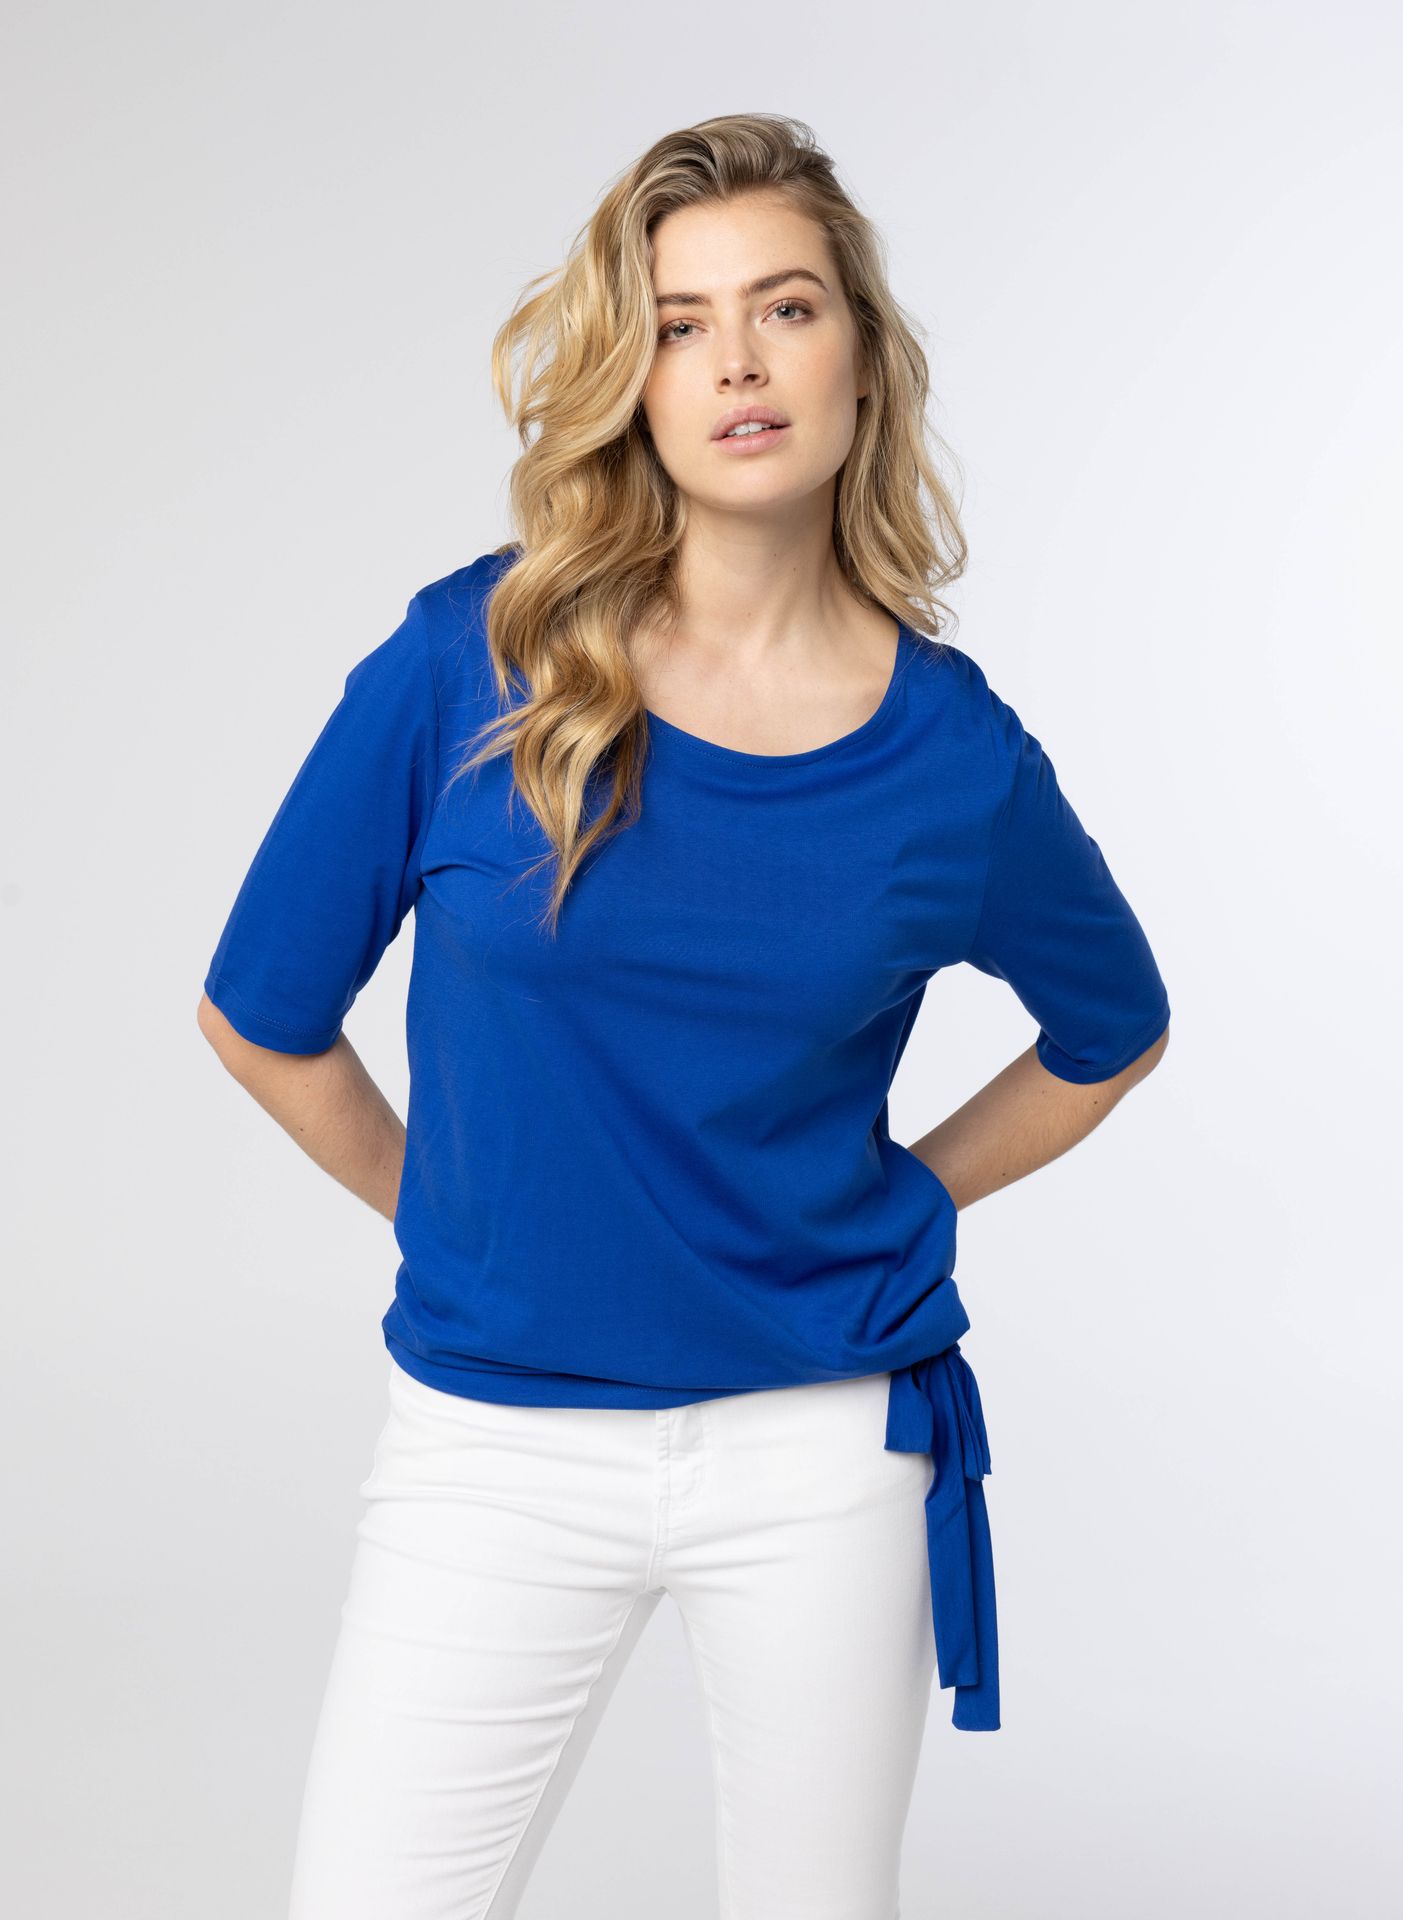 Norah Kobaltblauw shirt met strik cobalt 209993-468